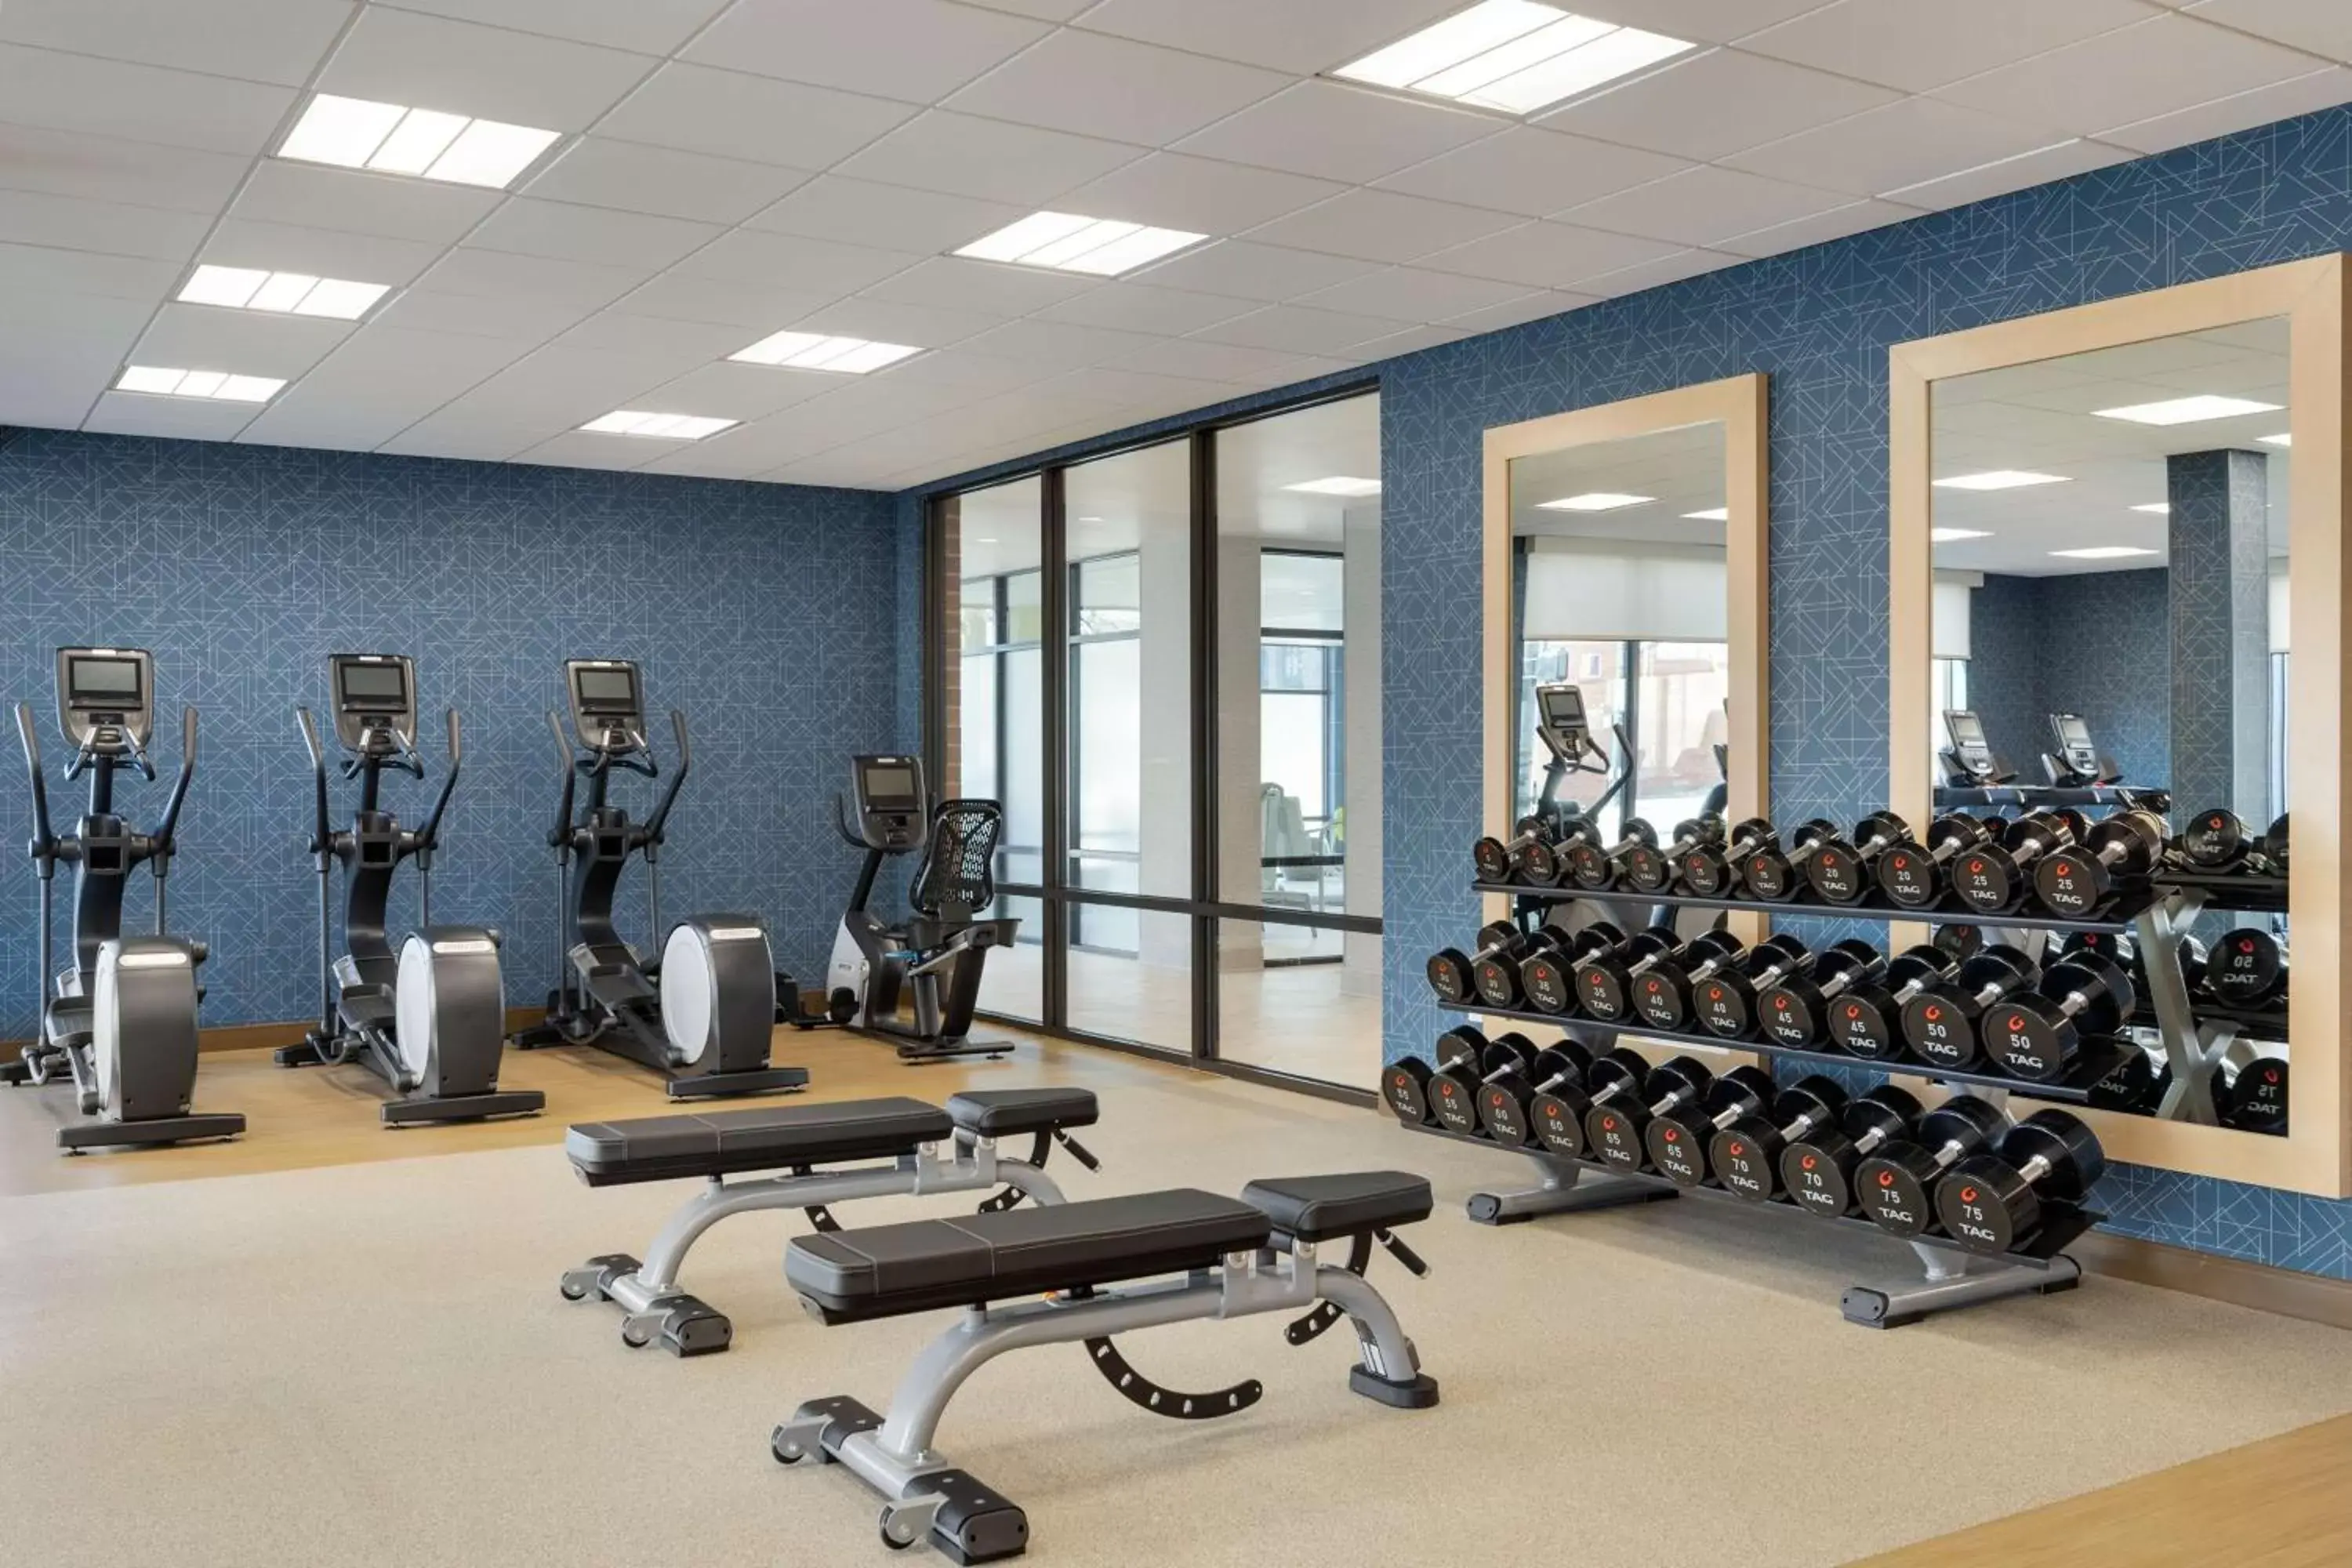 Fitness centre/facilities, Fitness Center/Facilities in Tru By Hilton Ogden, Ut